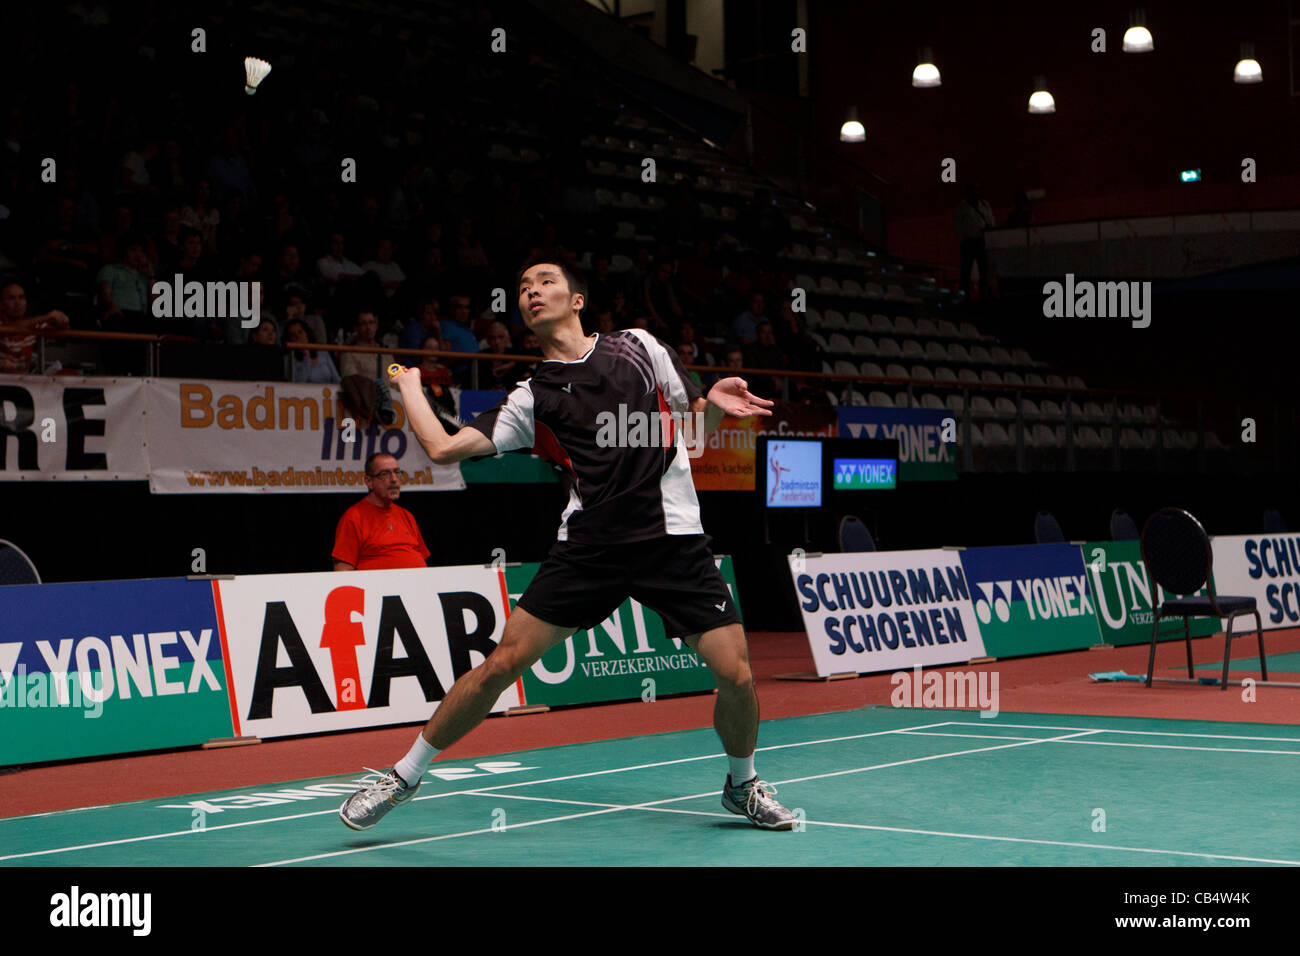 Badminton player Hsuan Yi Hsueh from Chinese Taipei Stock Photo